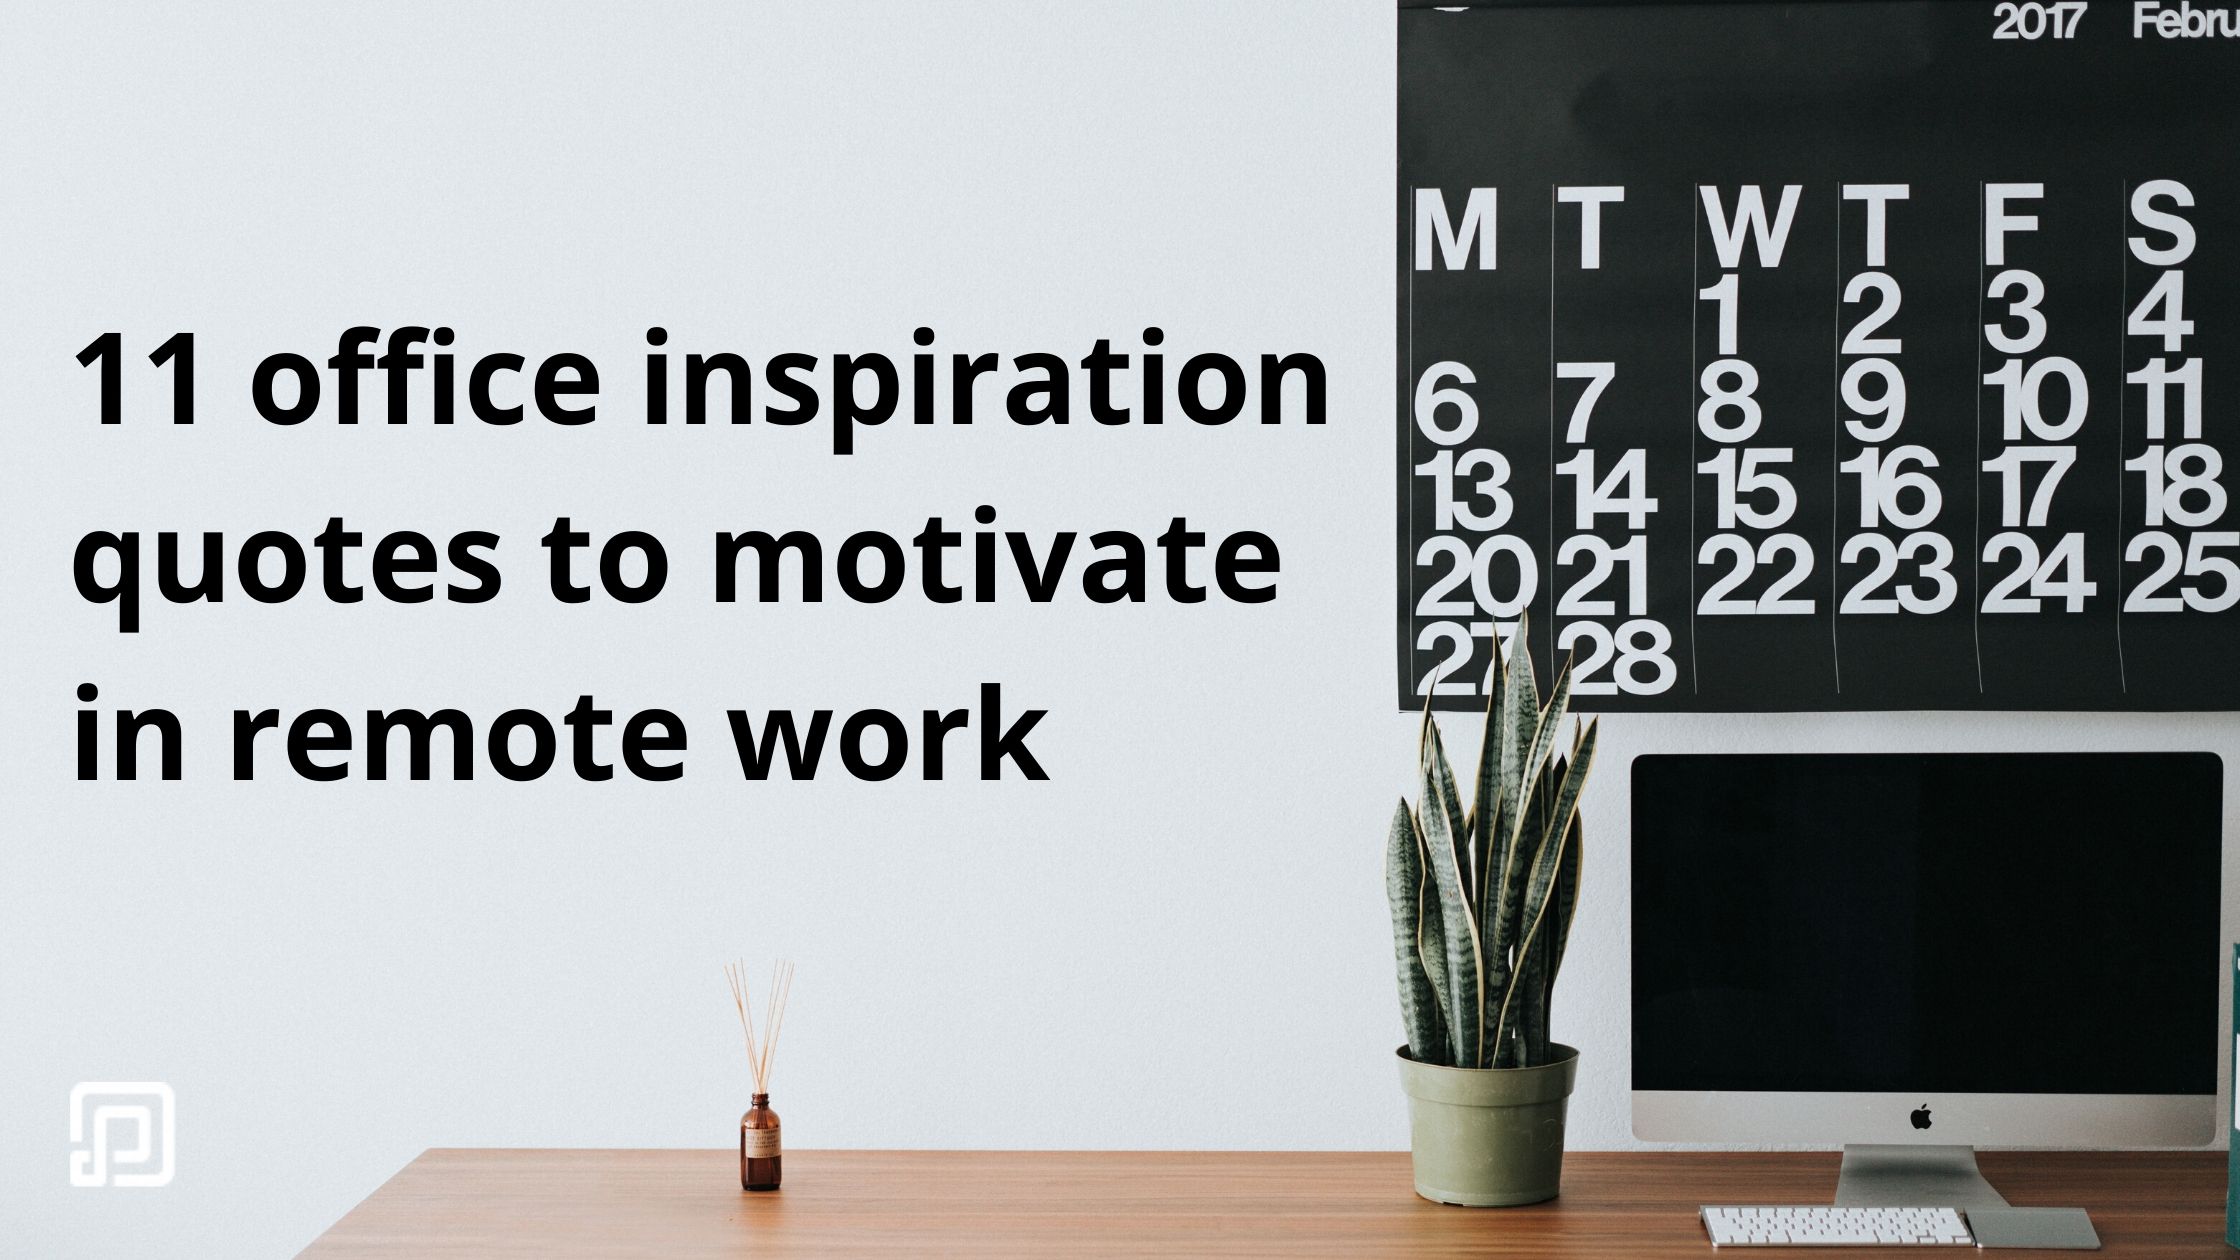 employee motivation | Peoplebox